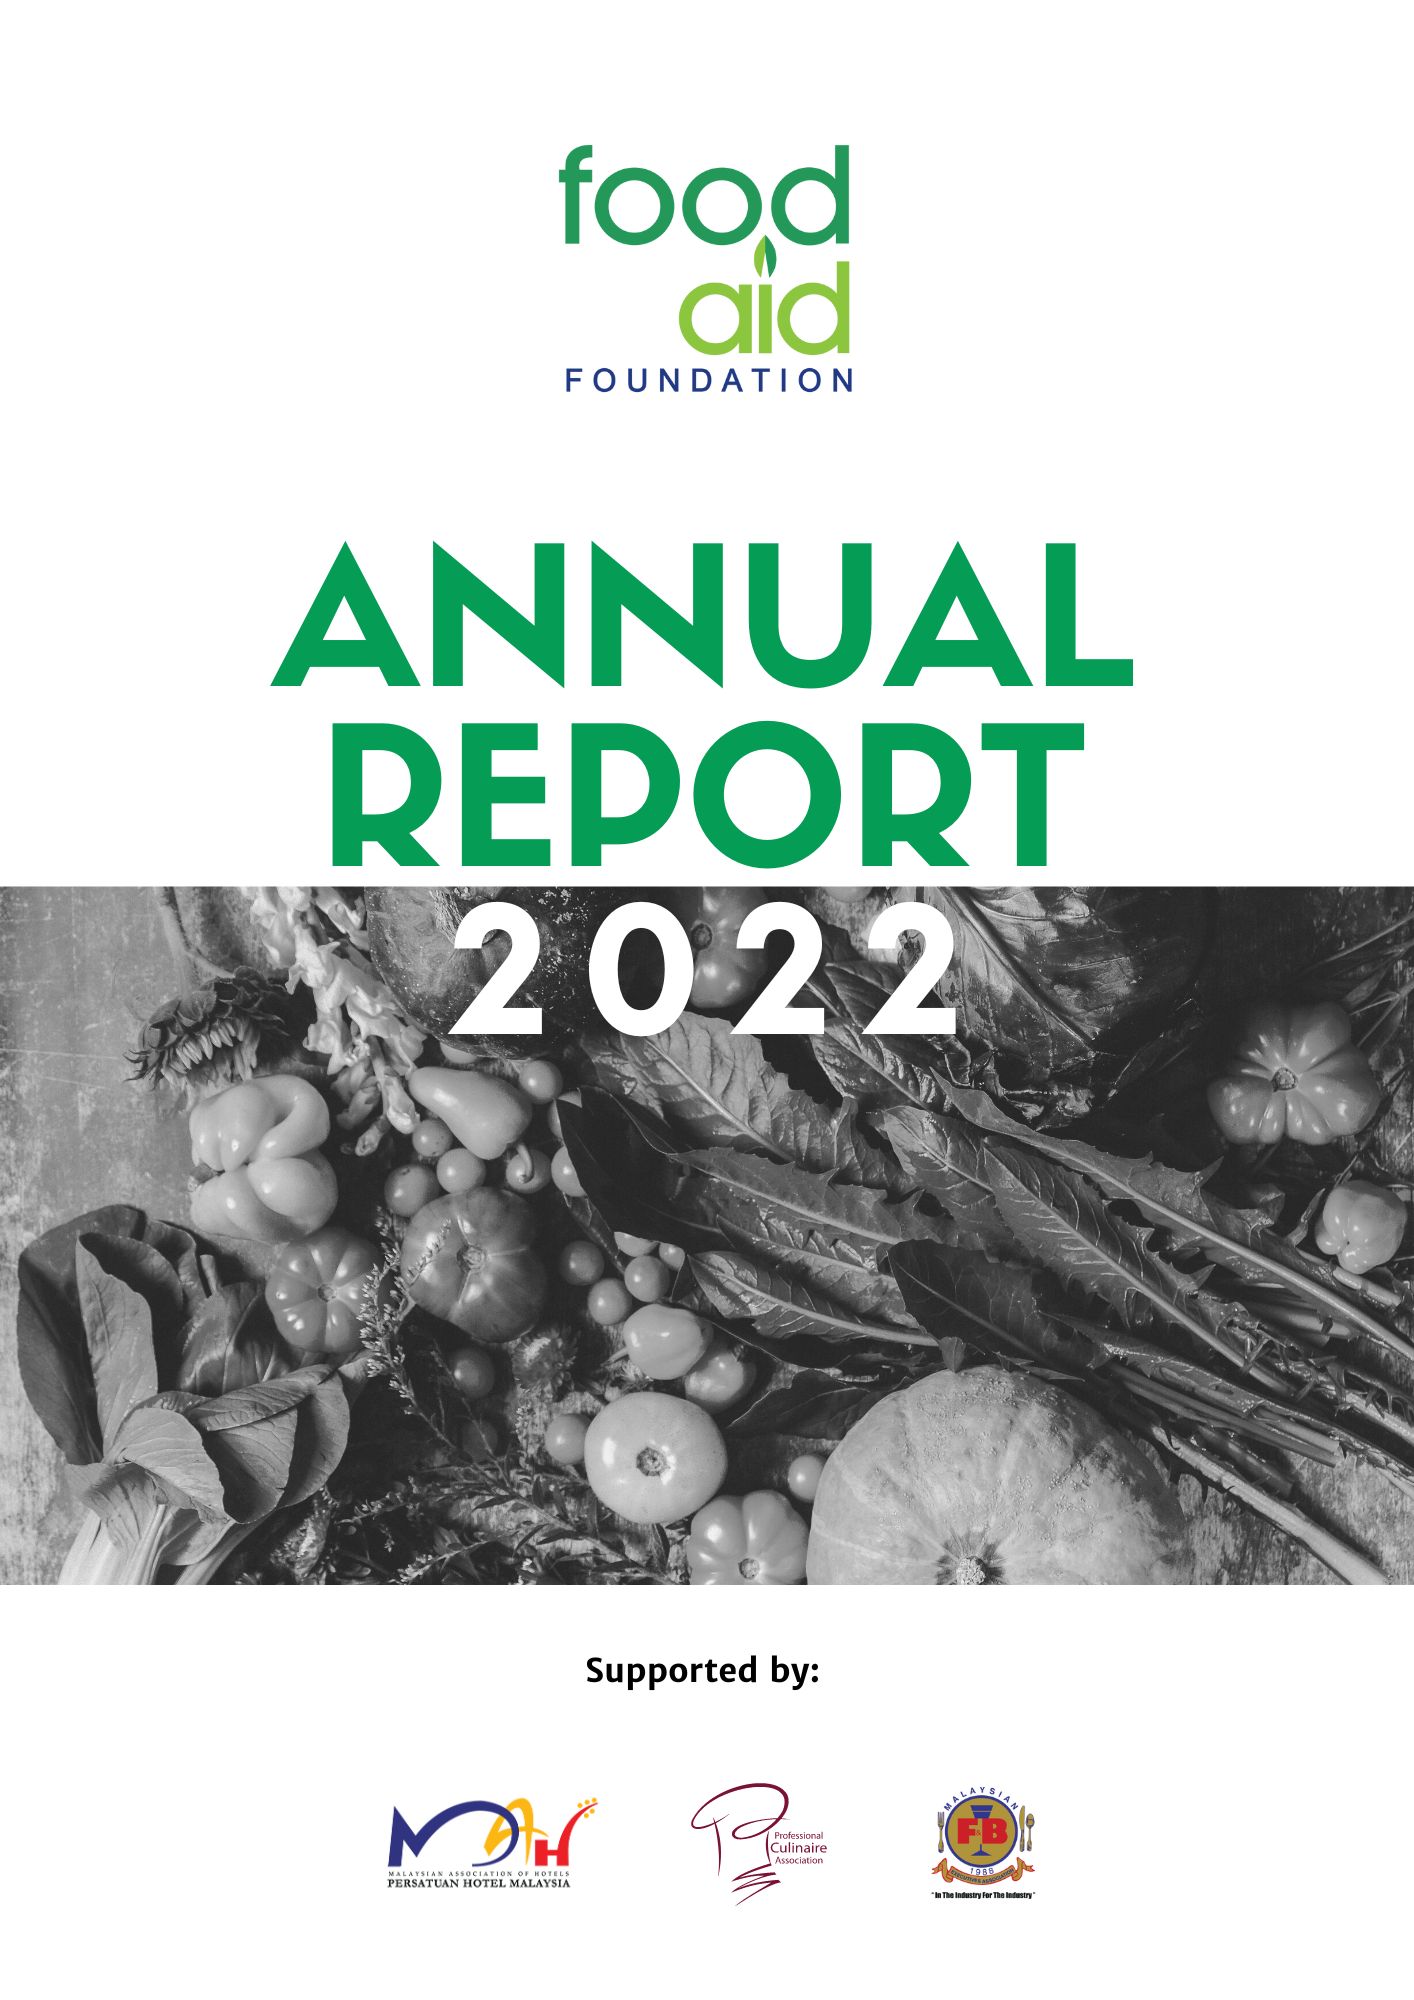 faf annual report